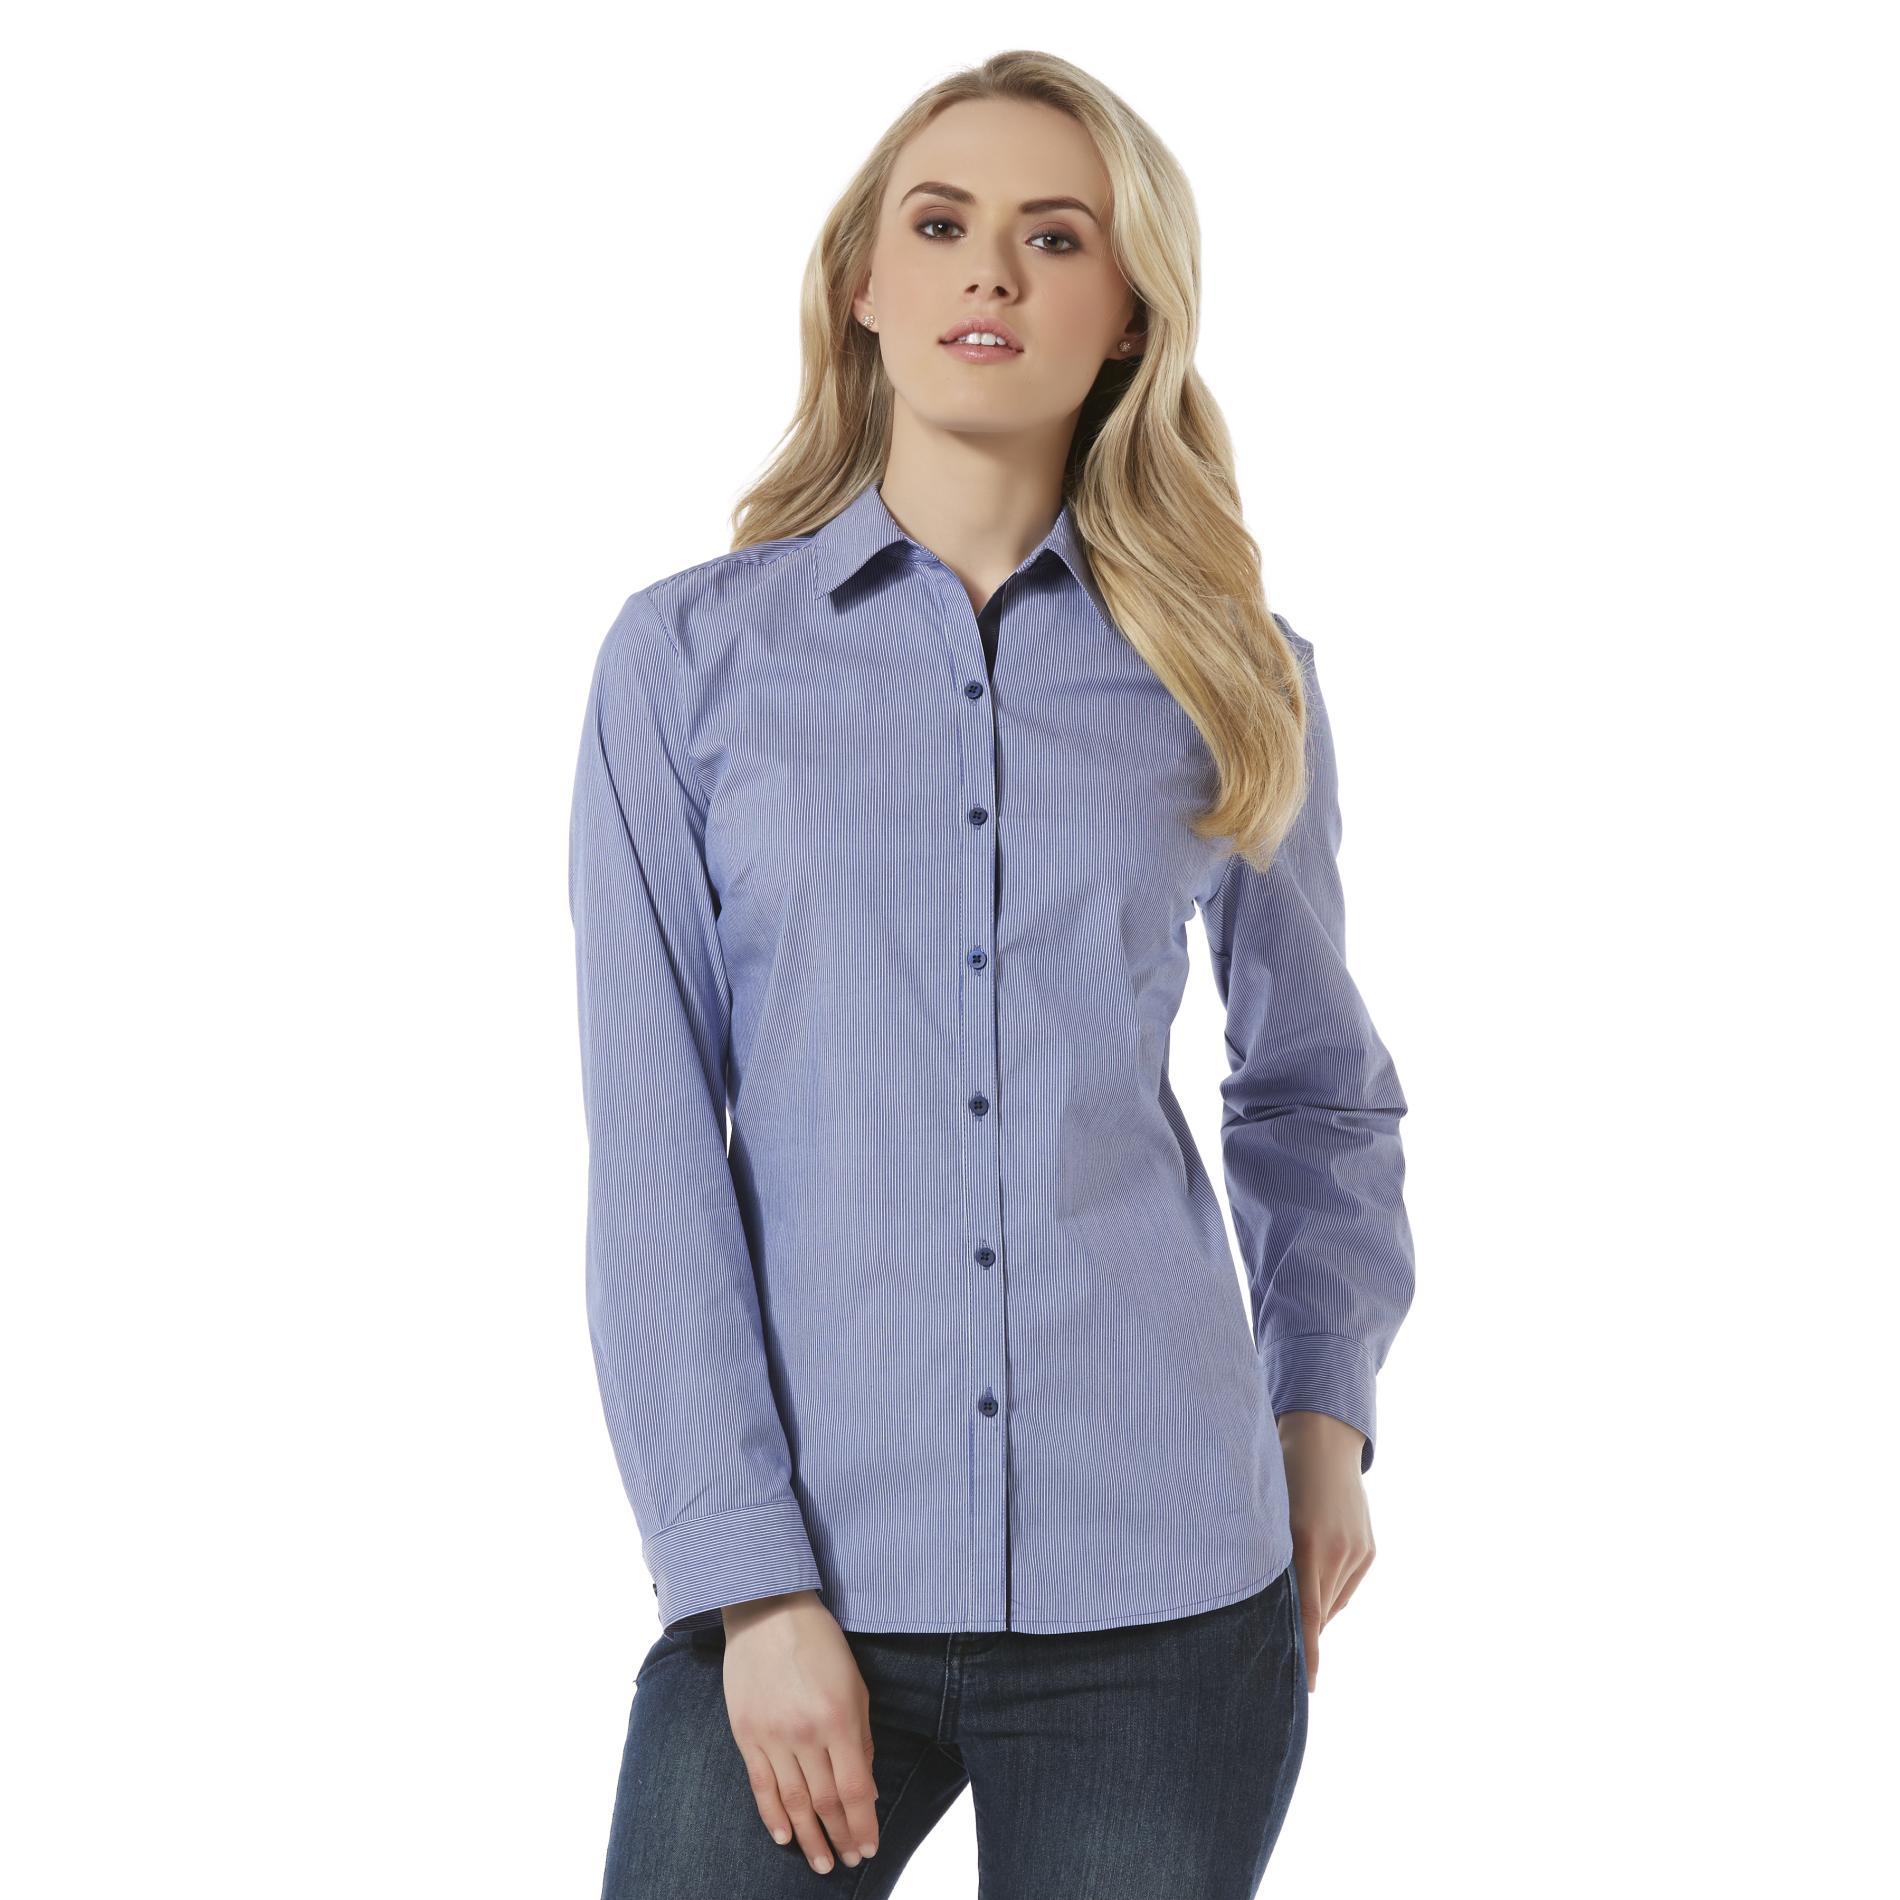 Covington Women's Essential Button-Up Shirt - Striped